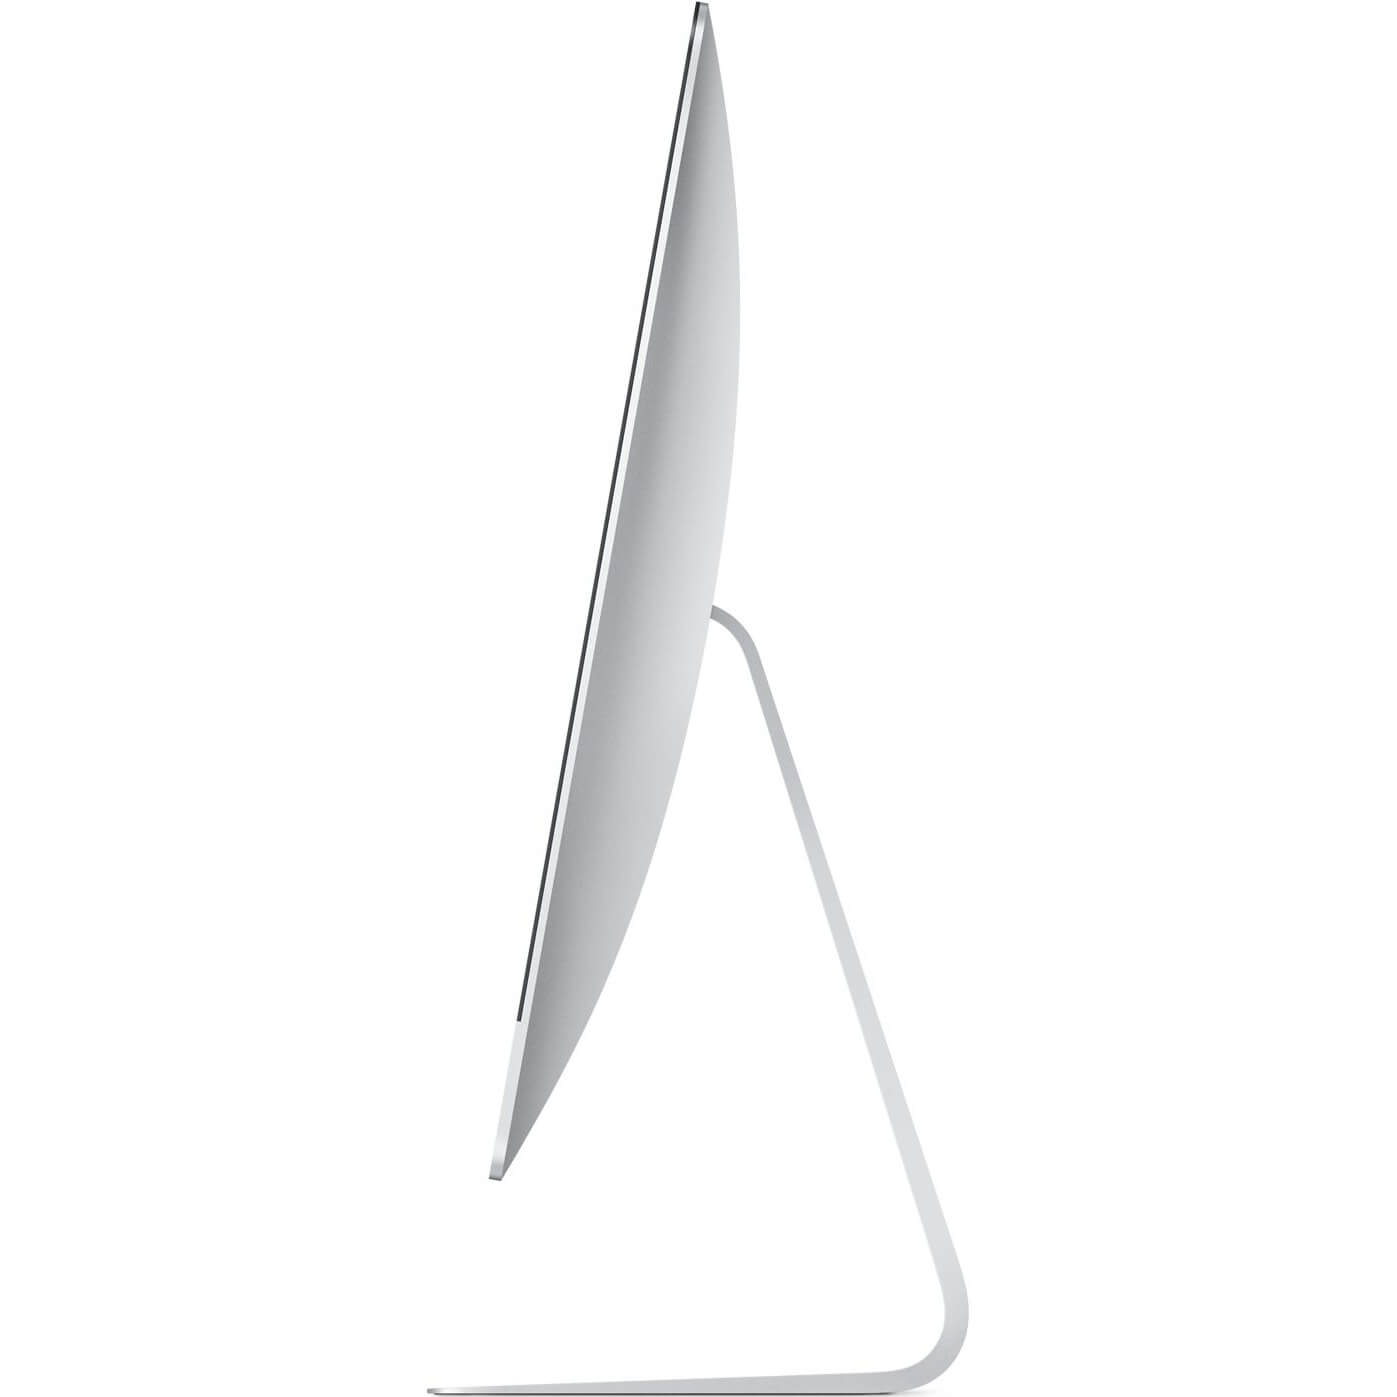 Restored Apple iMac 21.5 AIO Desktop Computer Intel Quad Core i5 8GB 1TB - MK442LL/A (Refurbished) - image 2 of 5